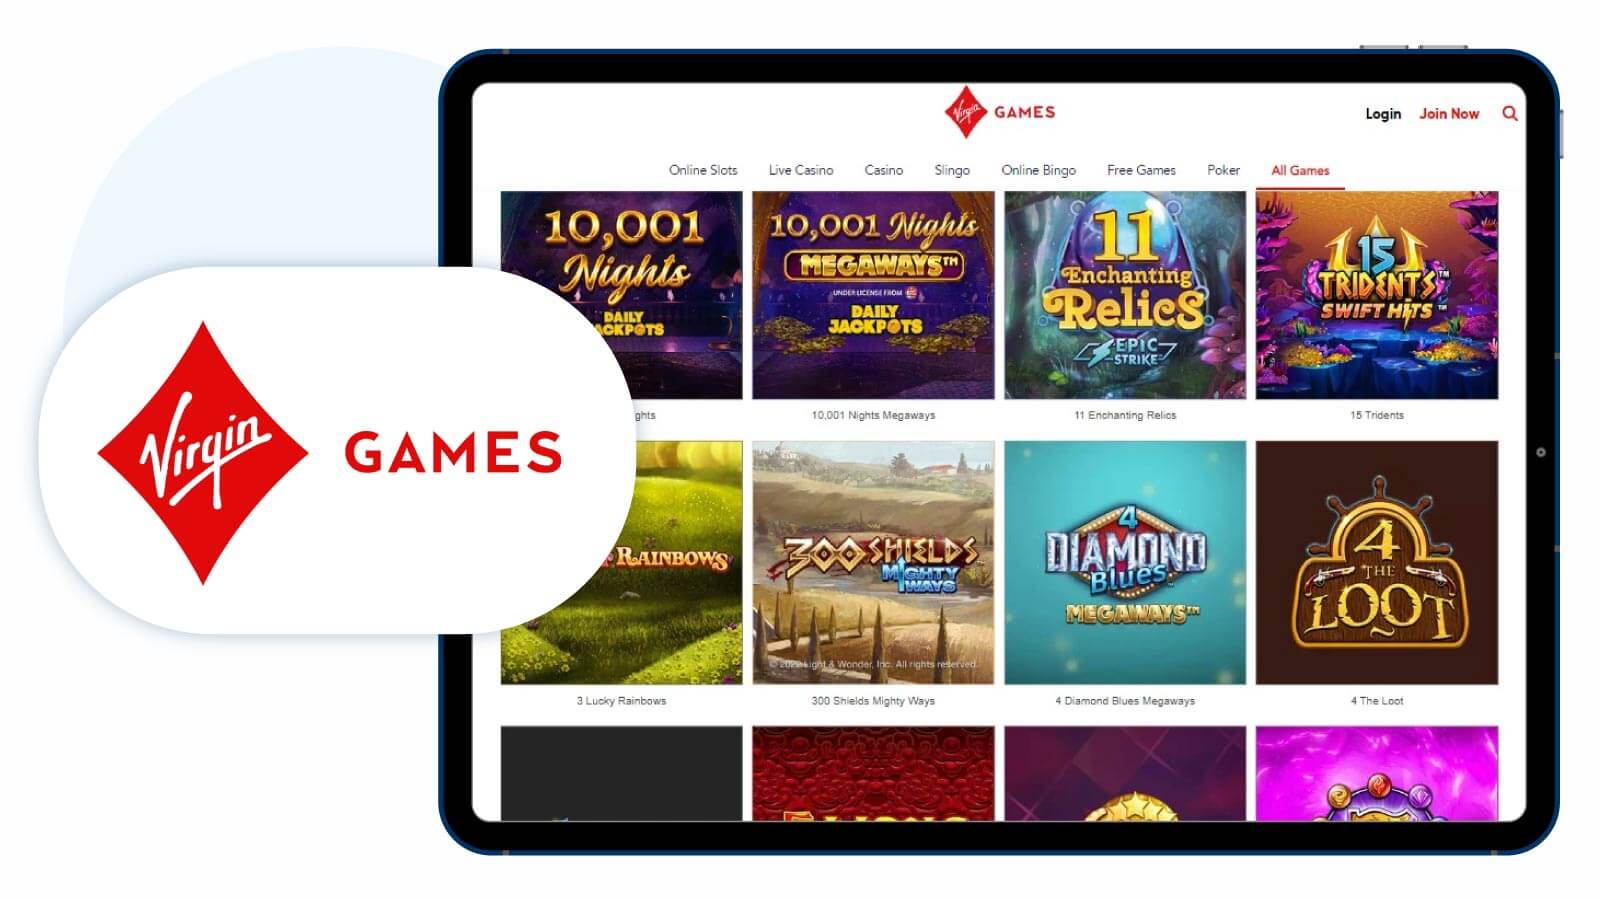 Virgin Games - Best NetEnt Casino for VIP Players